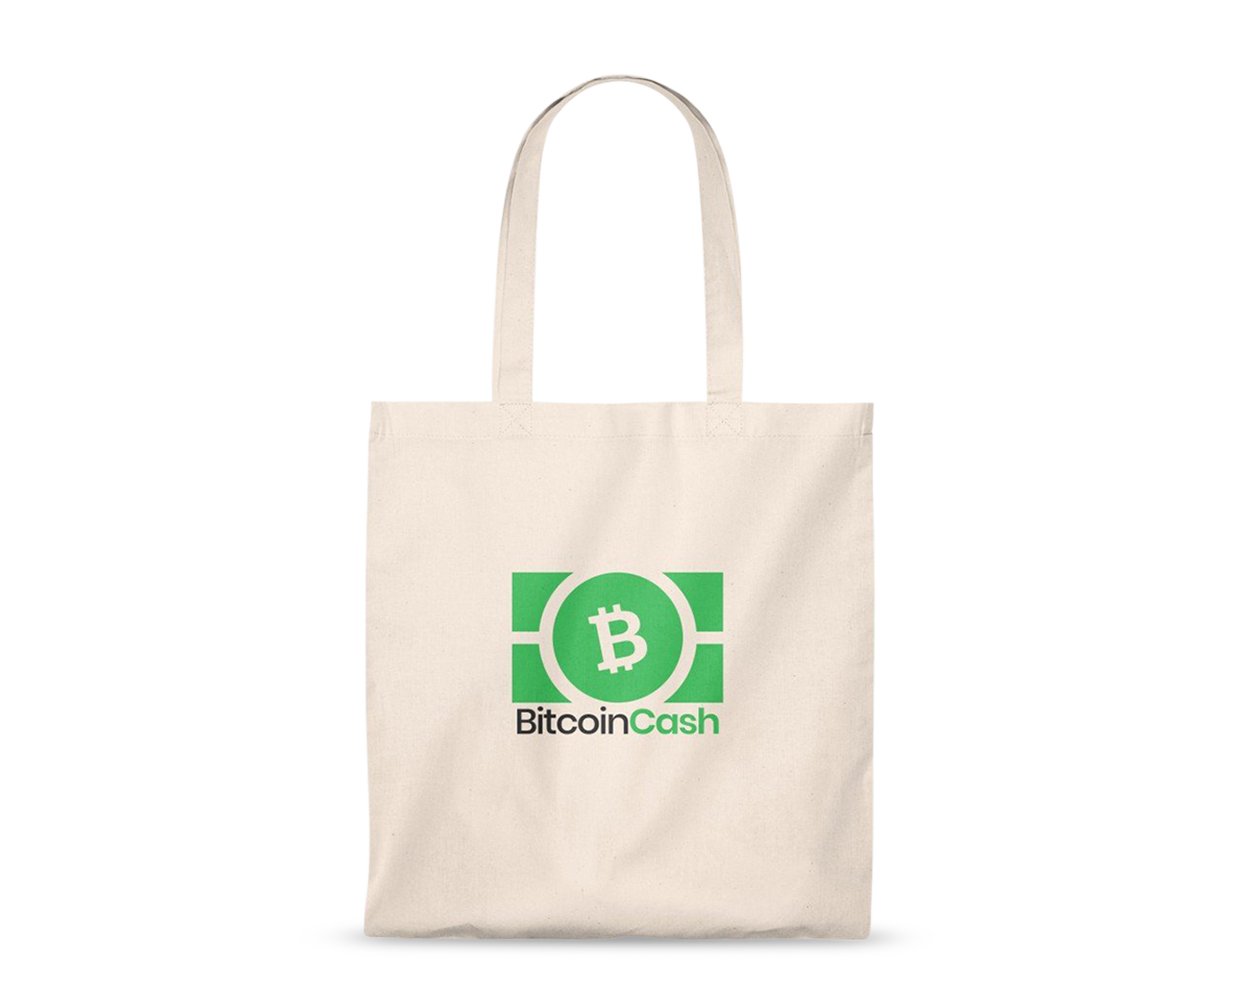 Bitcoin Cash Classic Tote Bag